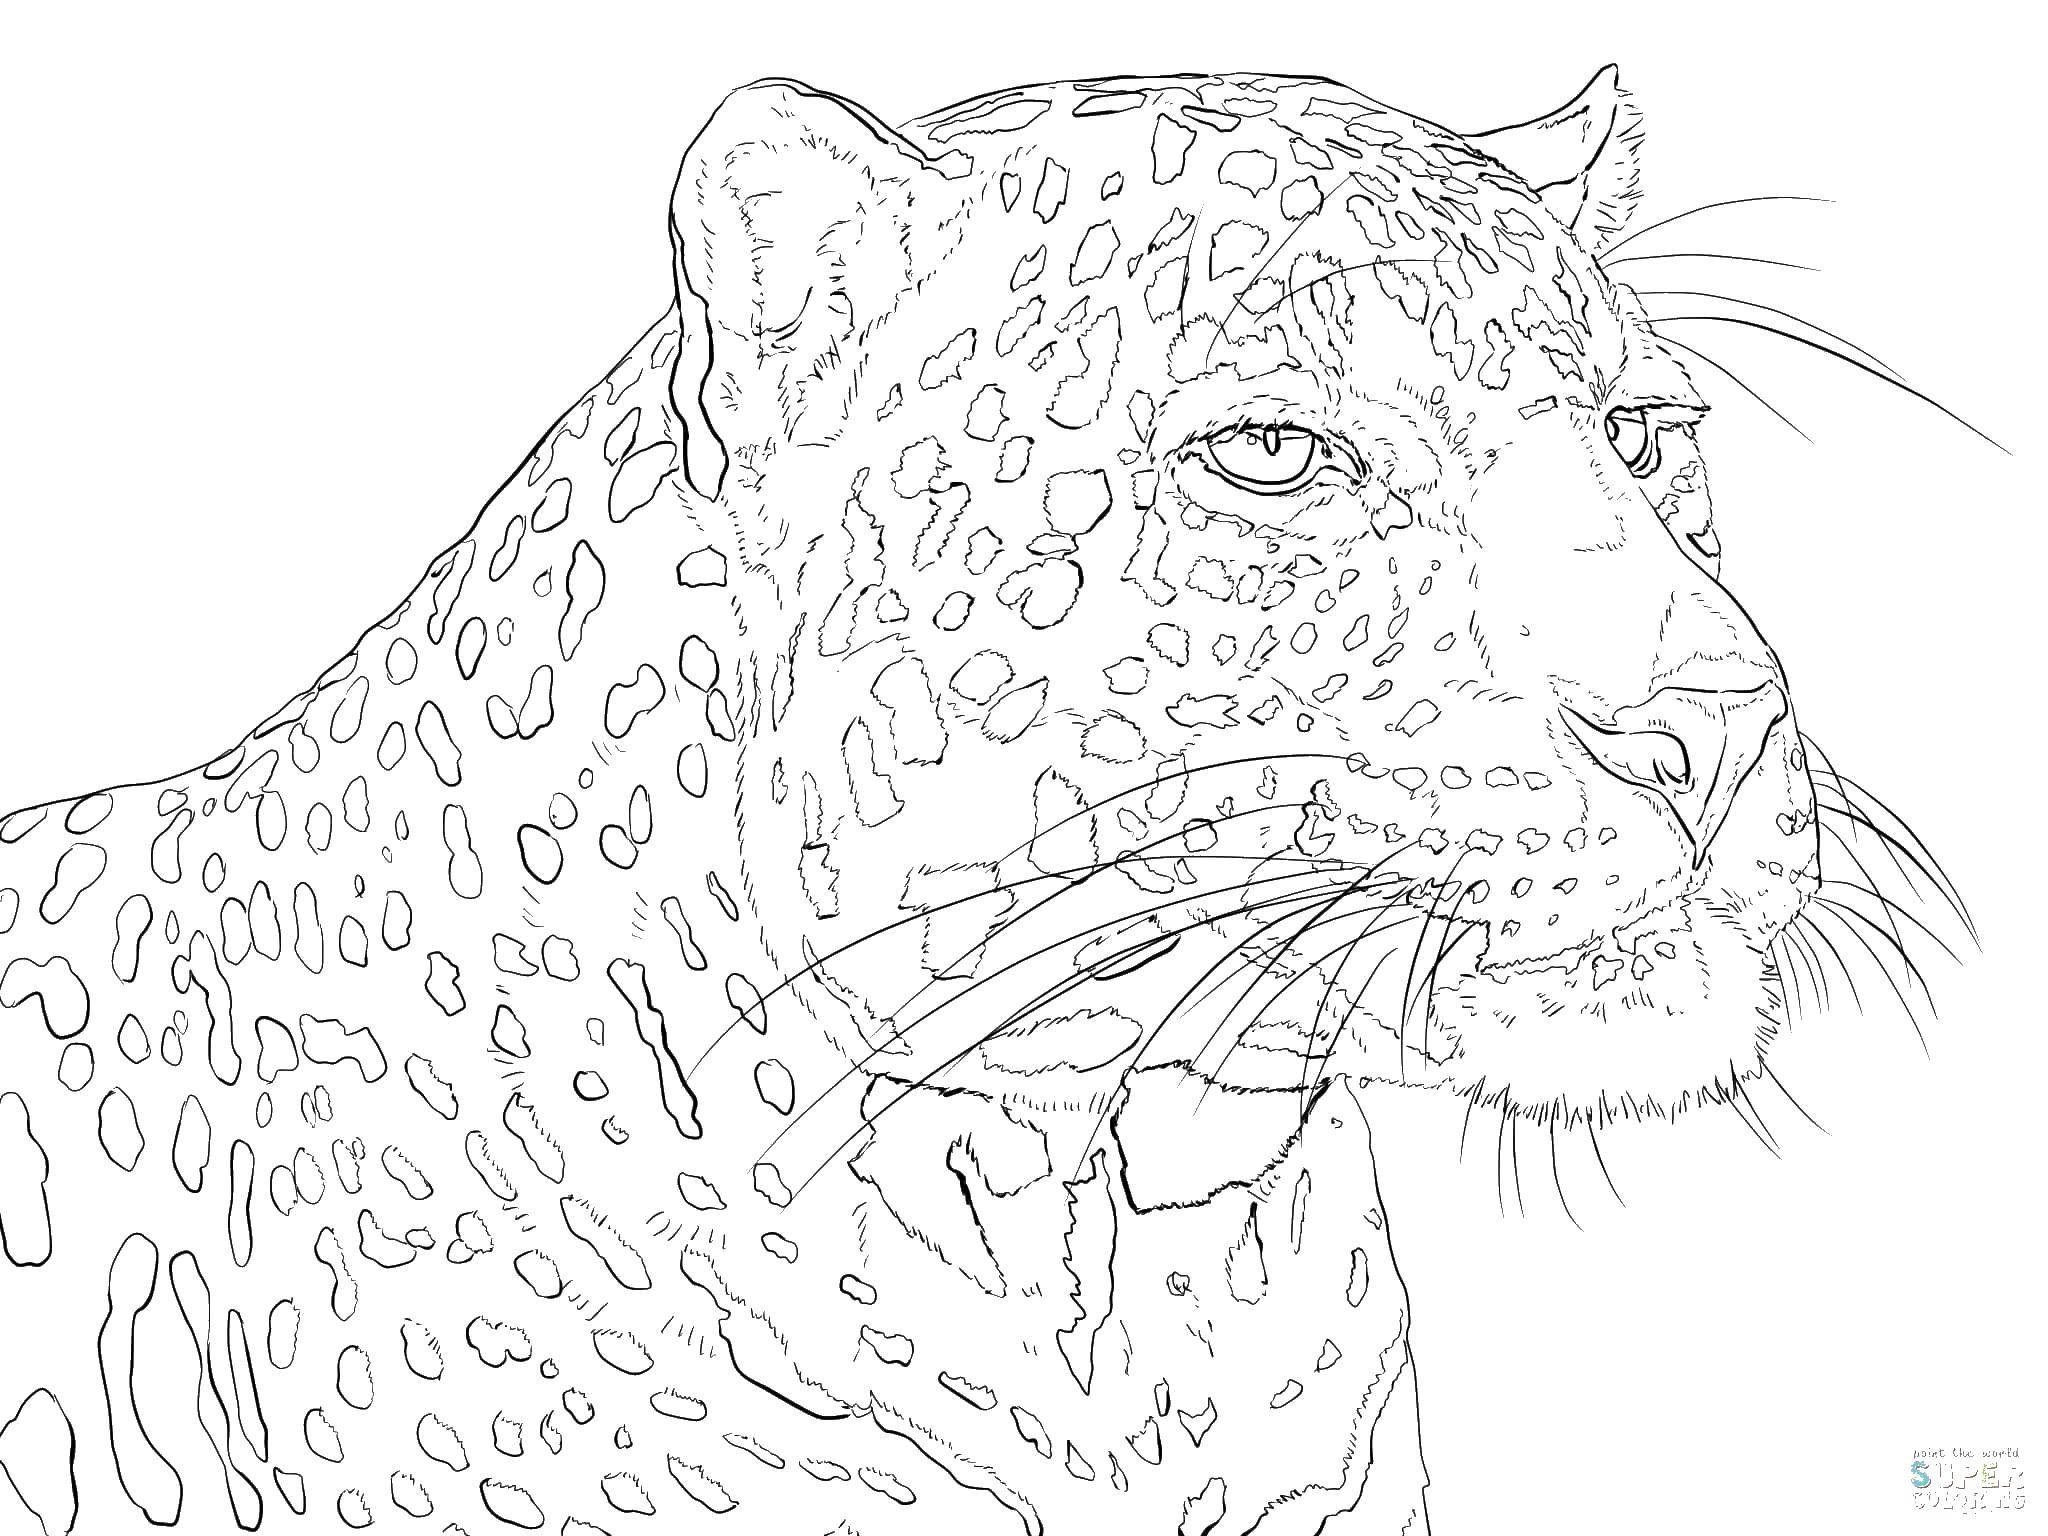 Coloring Cheetah. Category Animals. Tags:  animals, cat family, Cheetah.